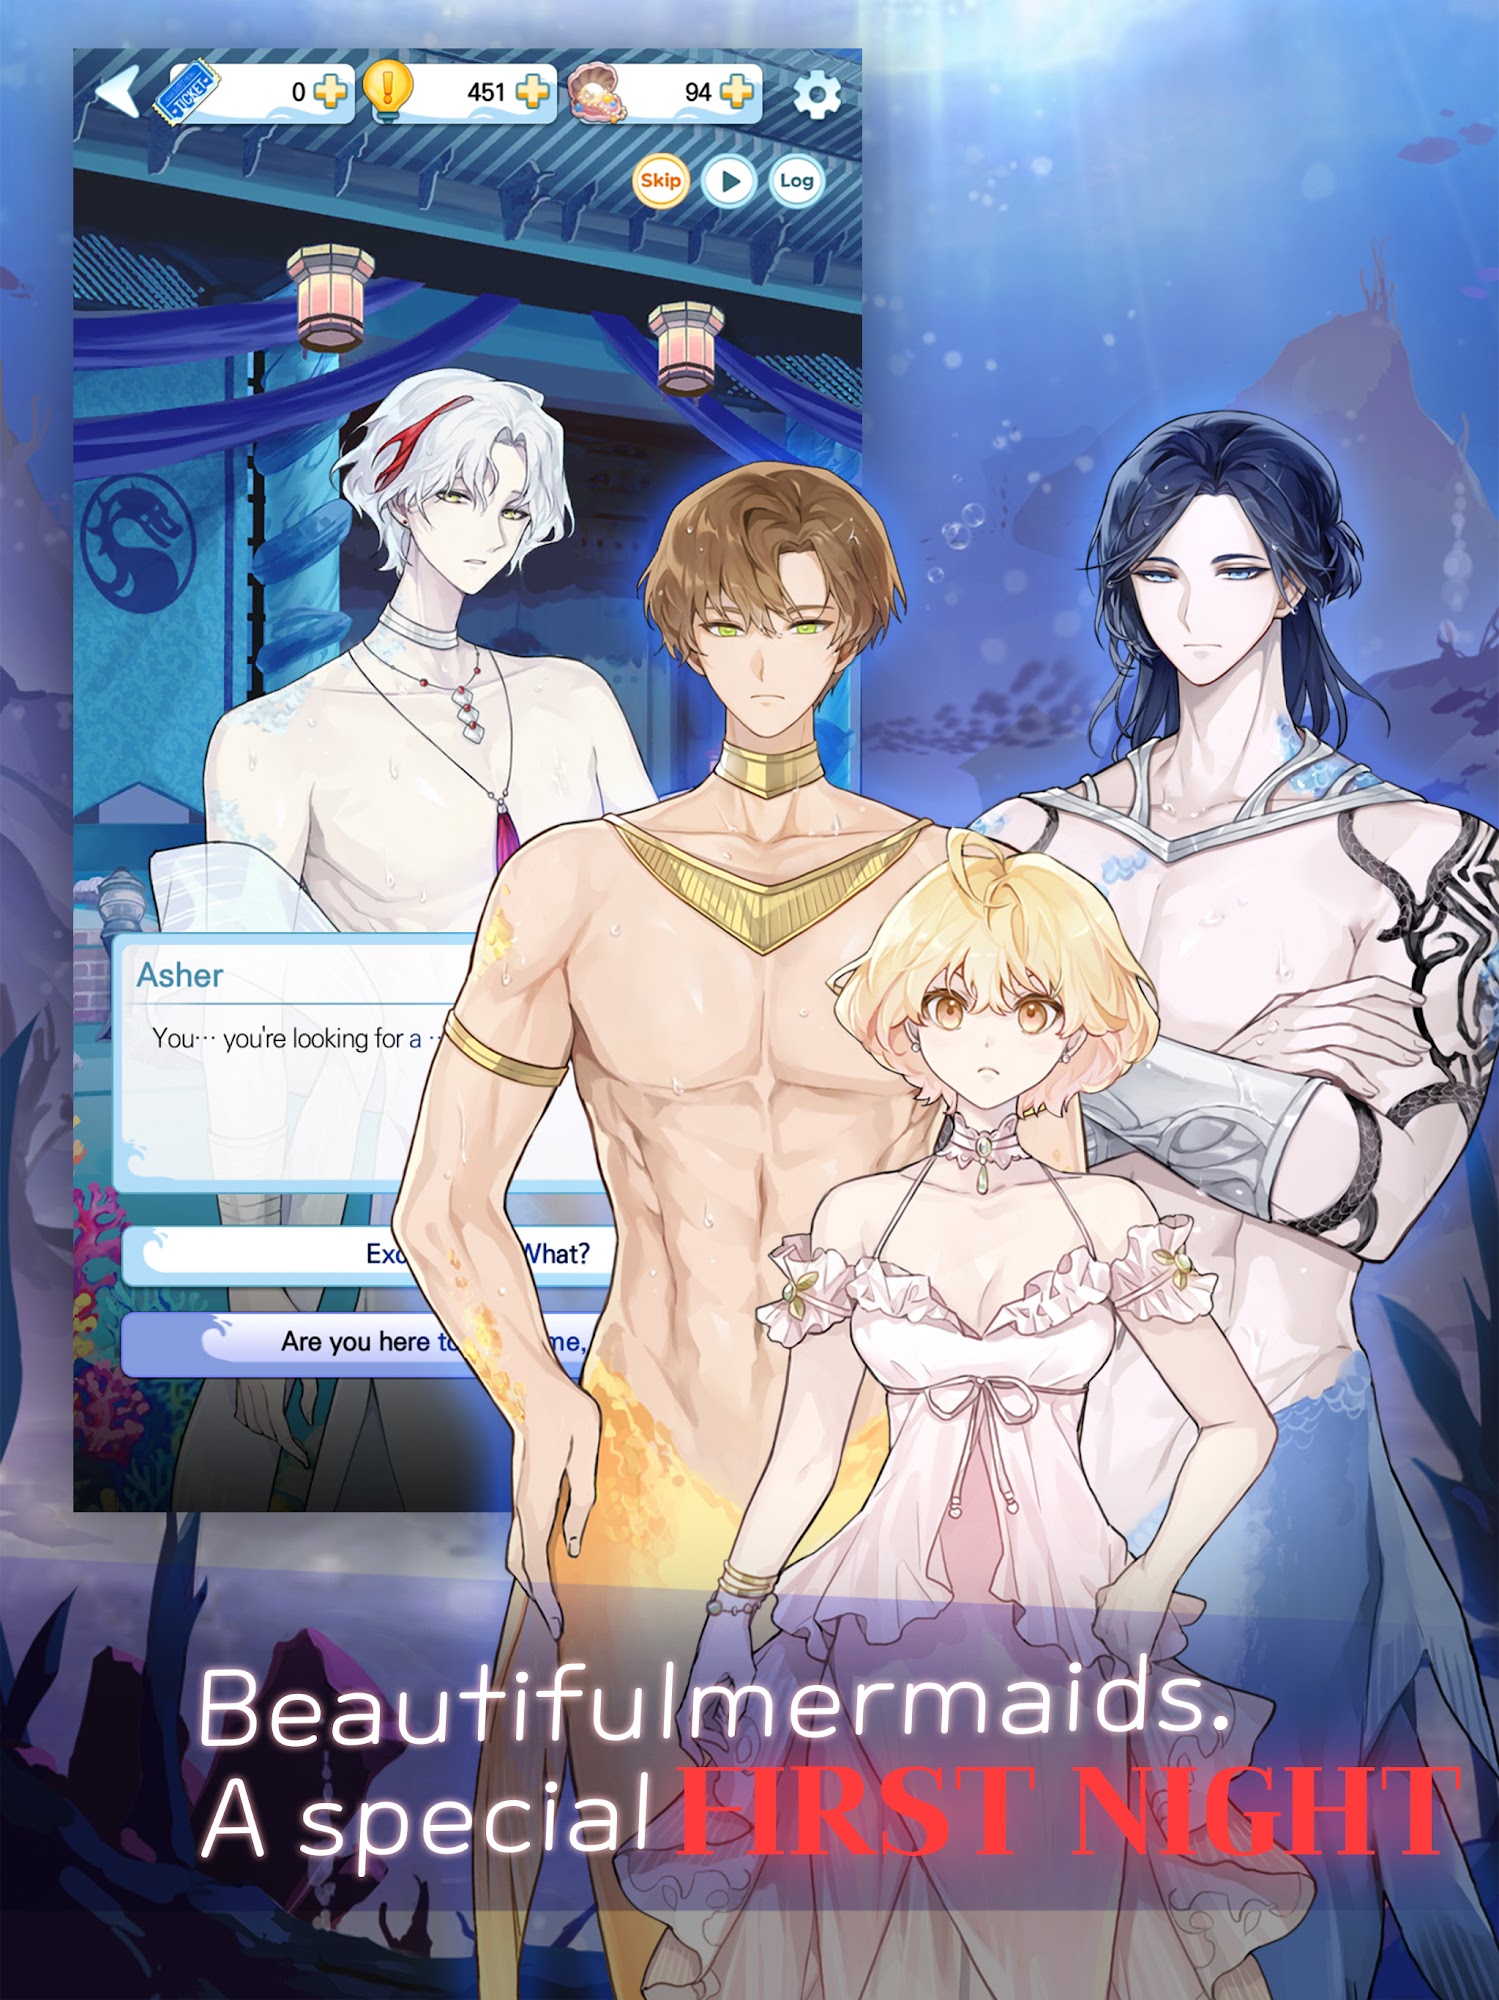 Aqua Romance: Mermaid Otome - Android game screenshots.